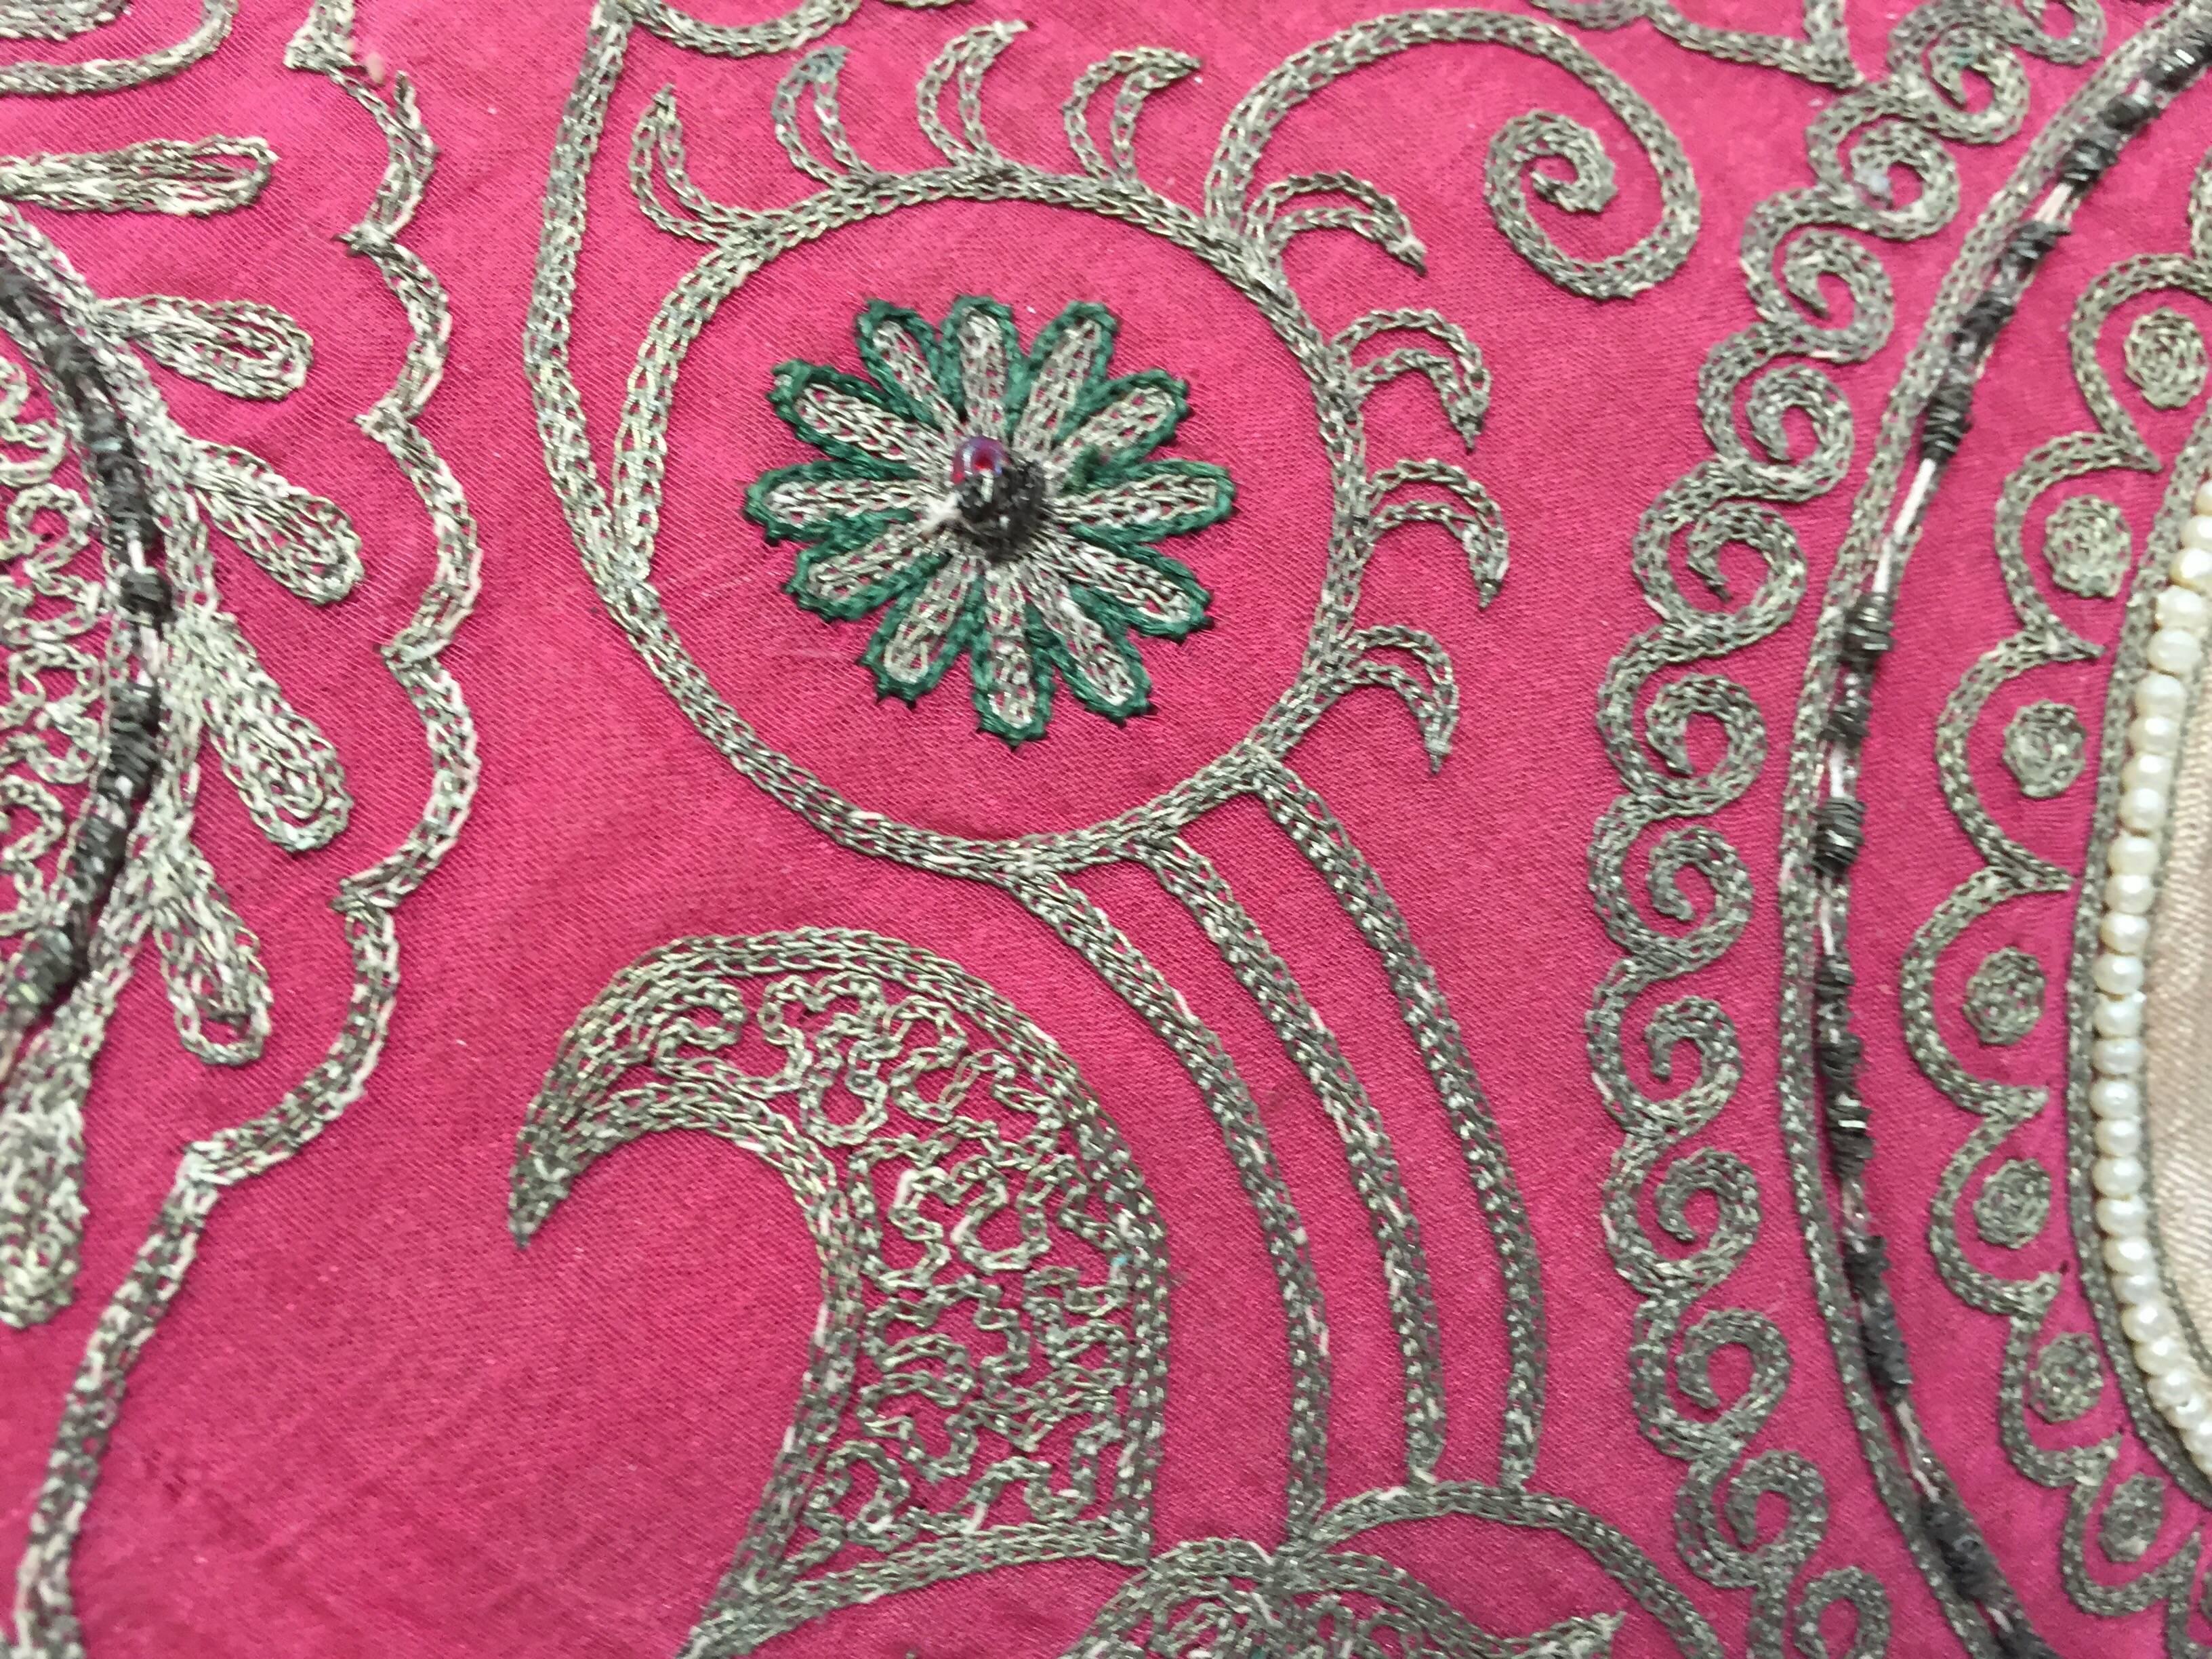 Antique Turkish Ottoman Silk Pillows with Metallic Threads a Pair 8